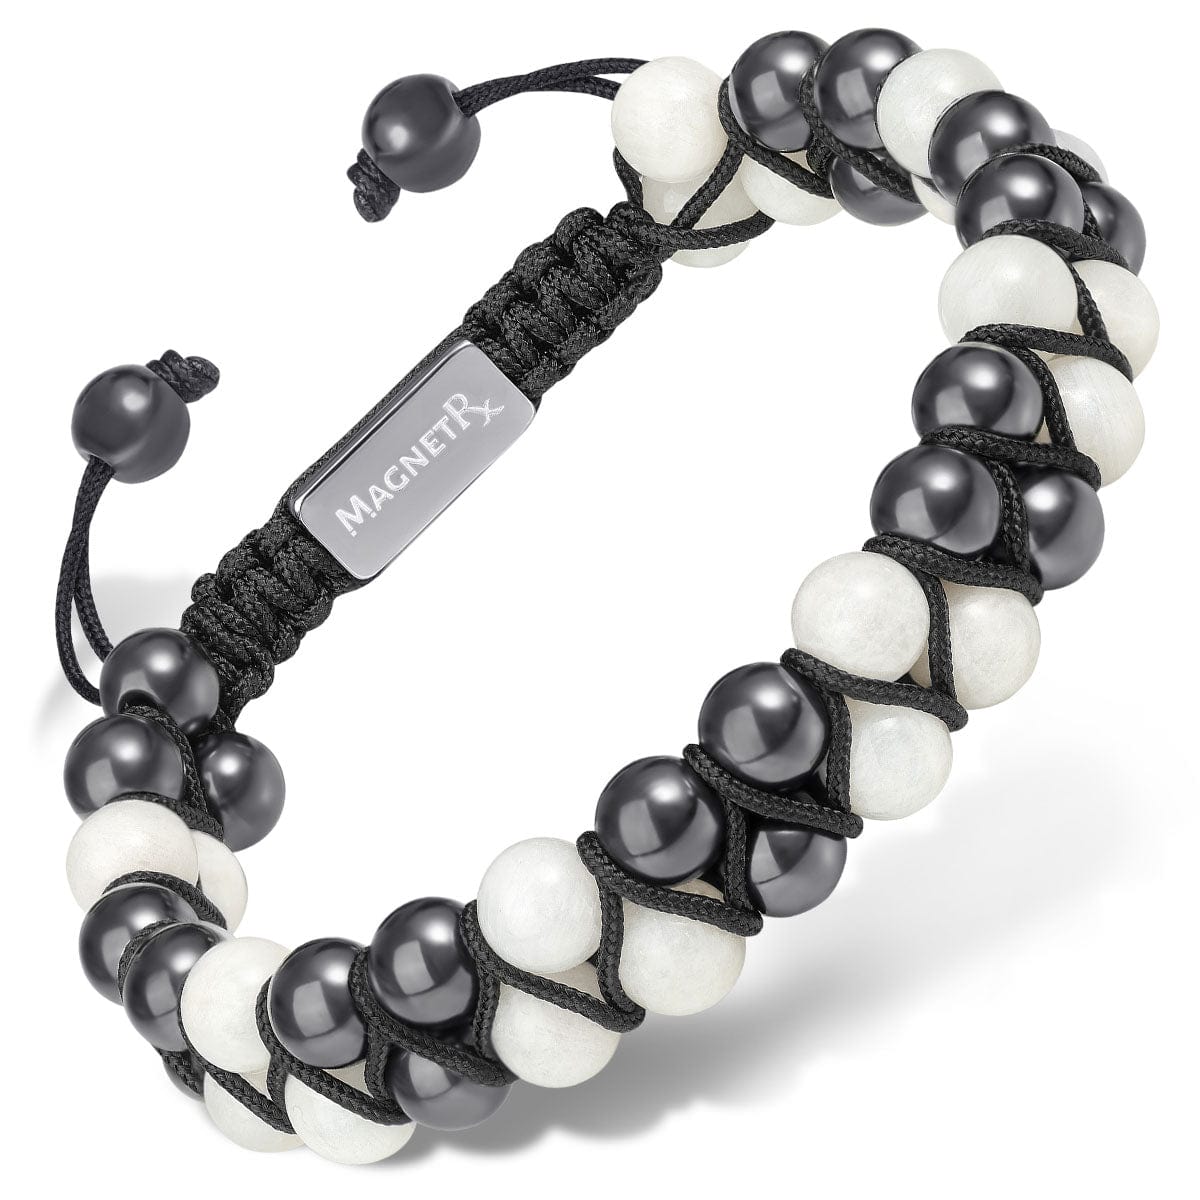 Extends Gemstone 3mm Bead Bracelet-Hematite Signature Cross - Charlotte's  Web Monogramming & Gifts